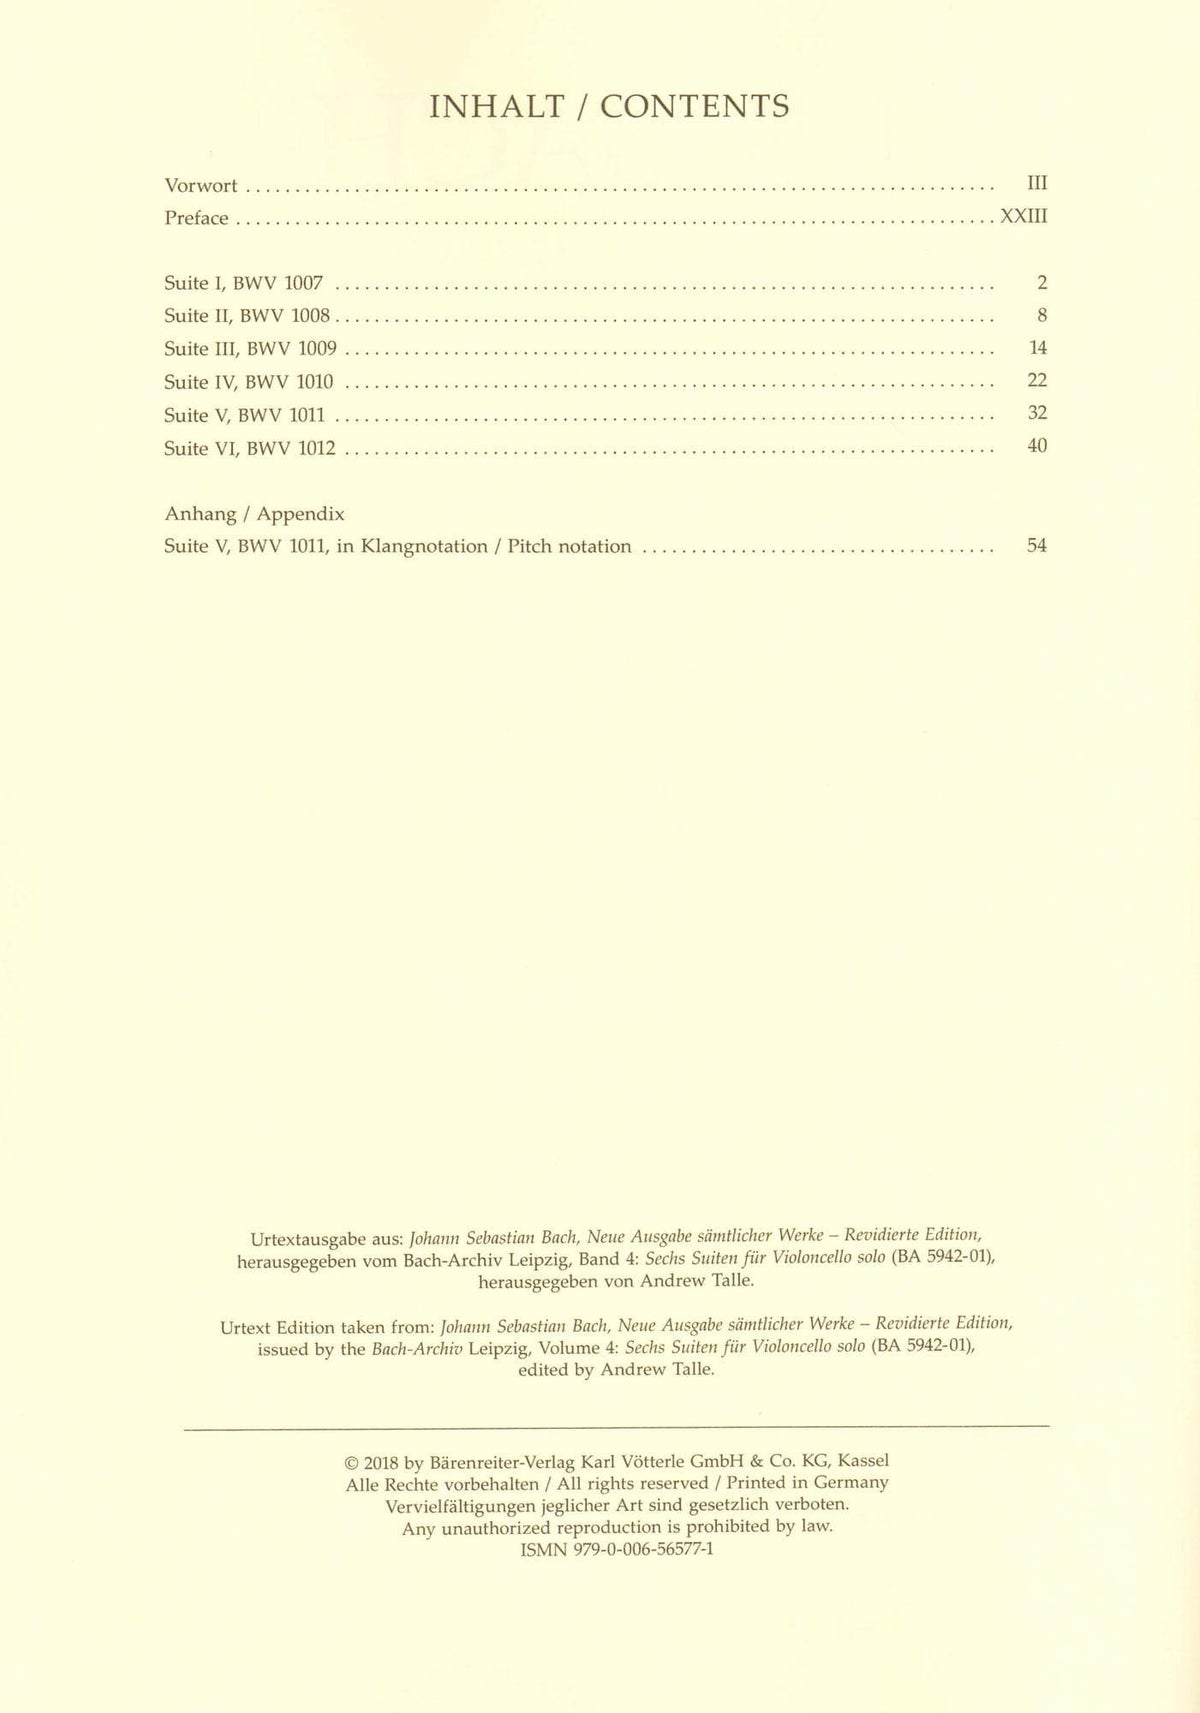 Bach, JS - 6 Suites, BWV 1007 1012 - Cello solo - edited by Andrew Talle - Bärenreiter Verlag URTEXT